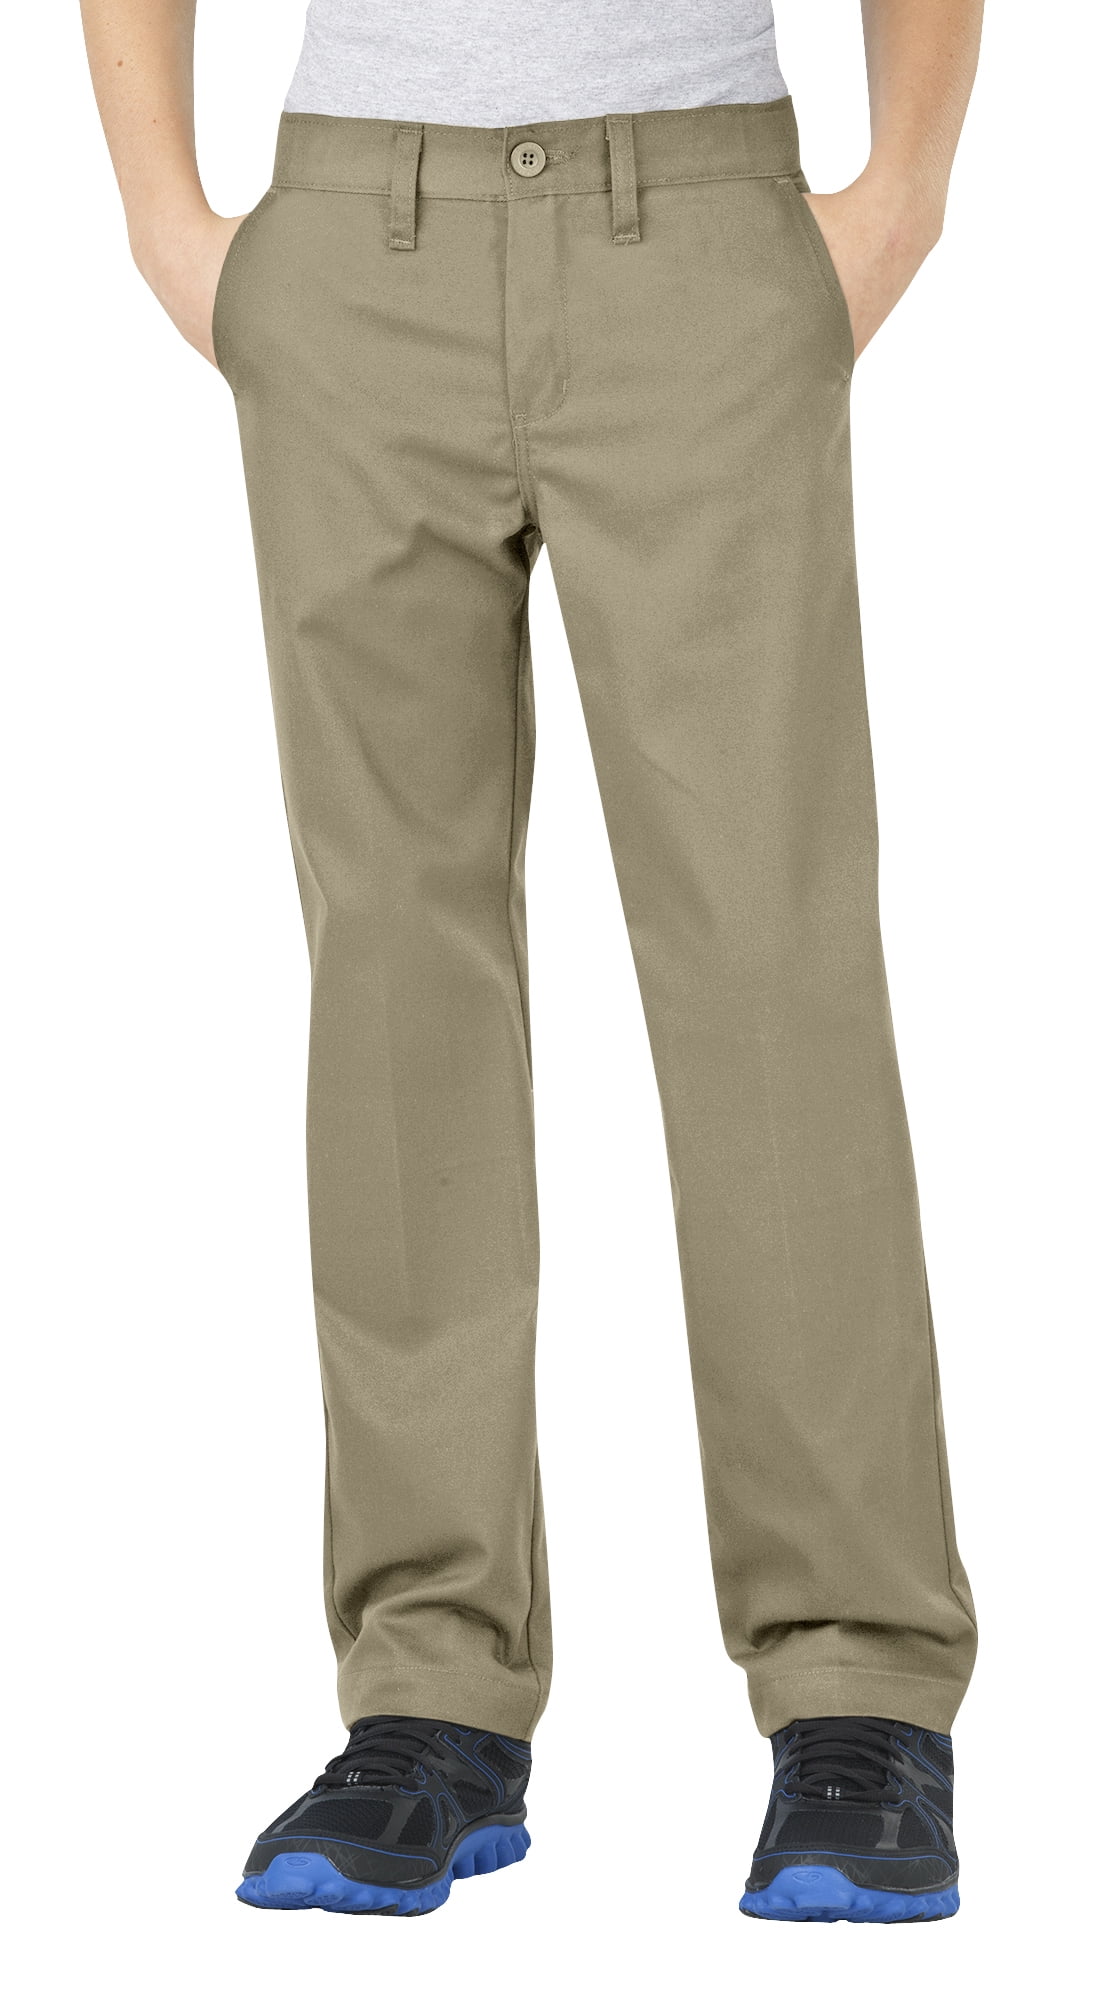 Boys' School Uniforms Slim Fit Flat Front Ultimate Khaki Pant - Walmart.com